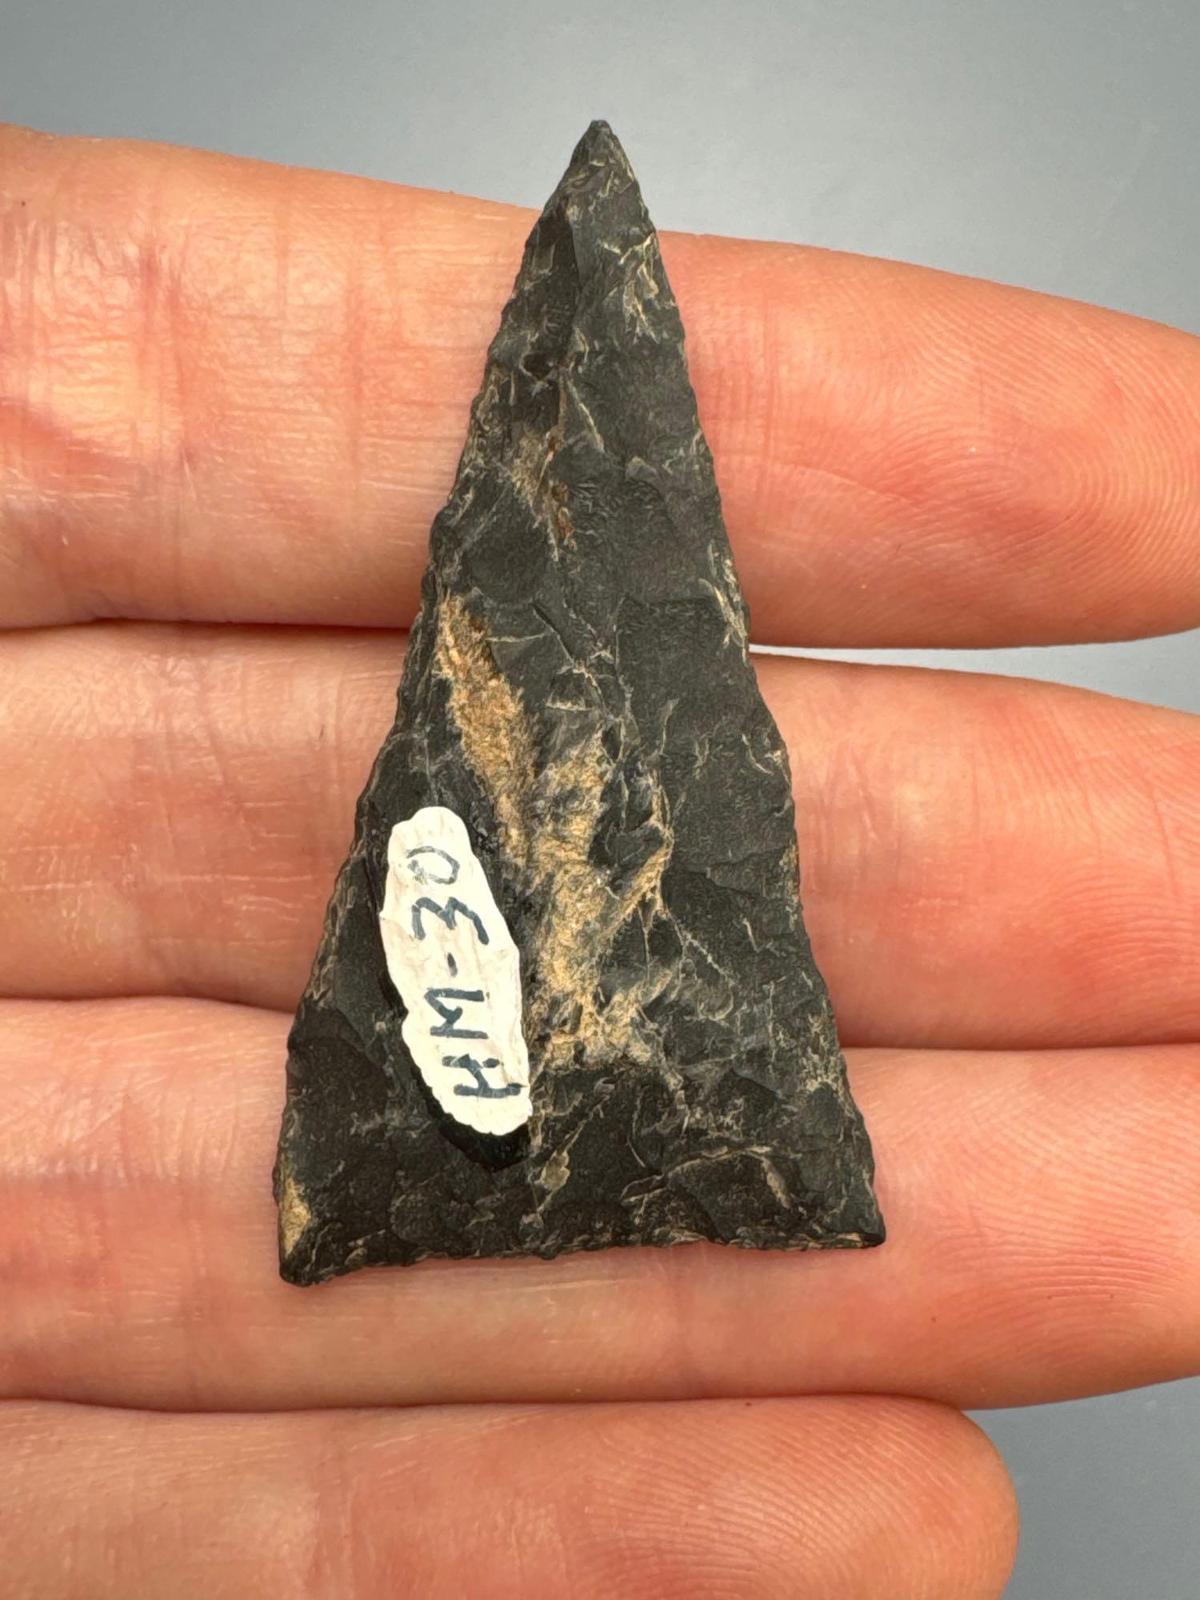 Larger 1 5/8" Triangle Arrowhead, Chert, Found in PA/NJ/NY Tristate Area, Ex: Harry Mucklin, Lemaste